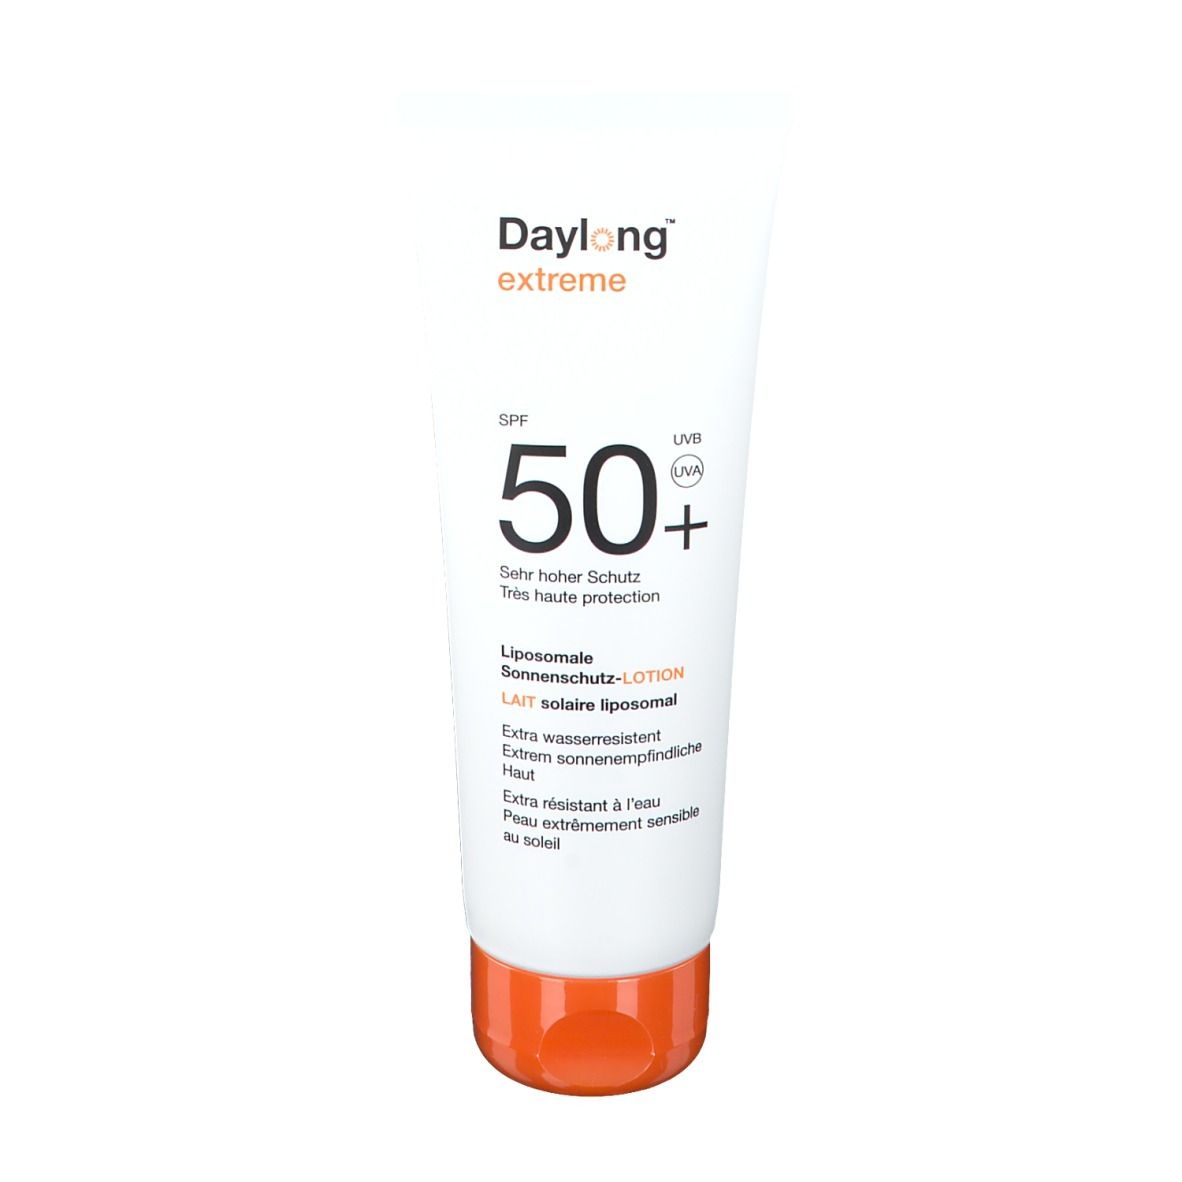 Image of Daylong Extreme SPF 50+ Sonnenmilch Liposom